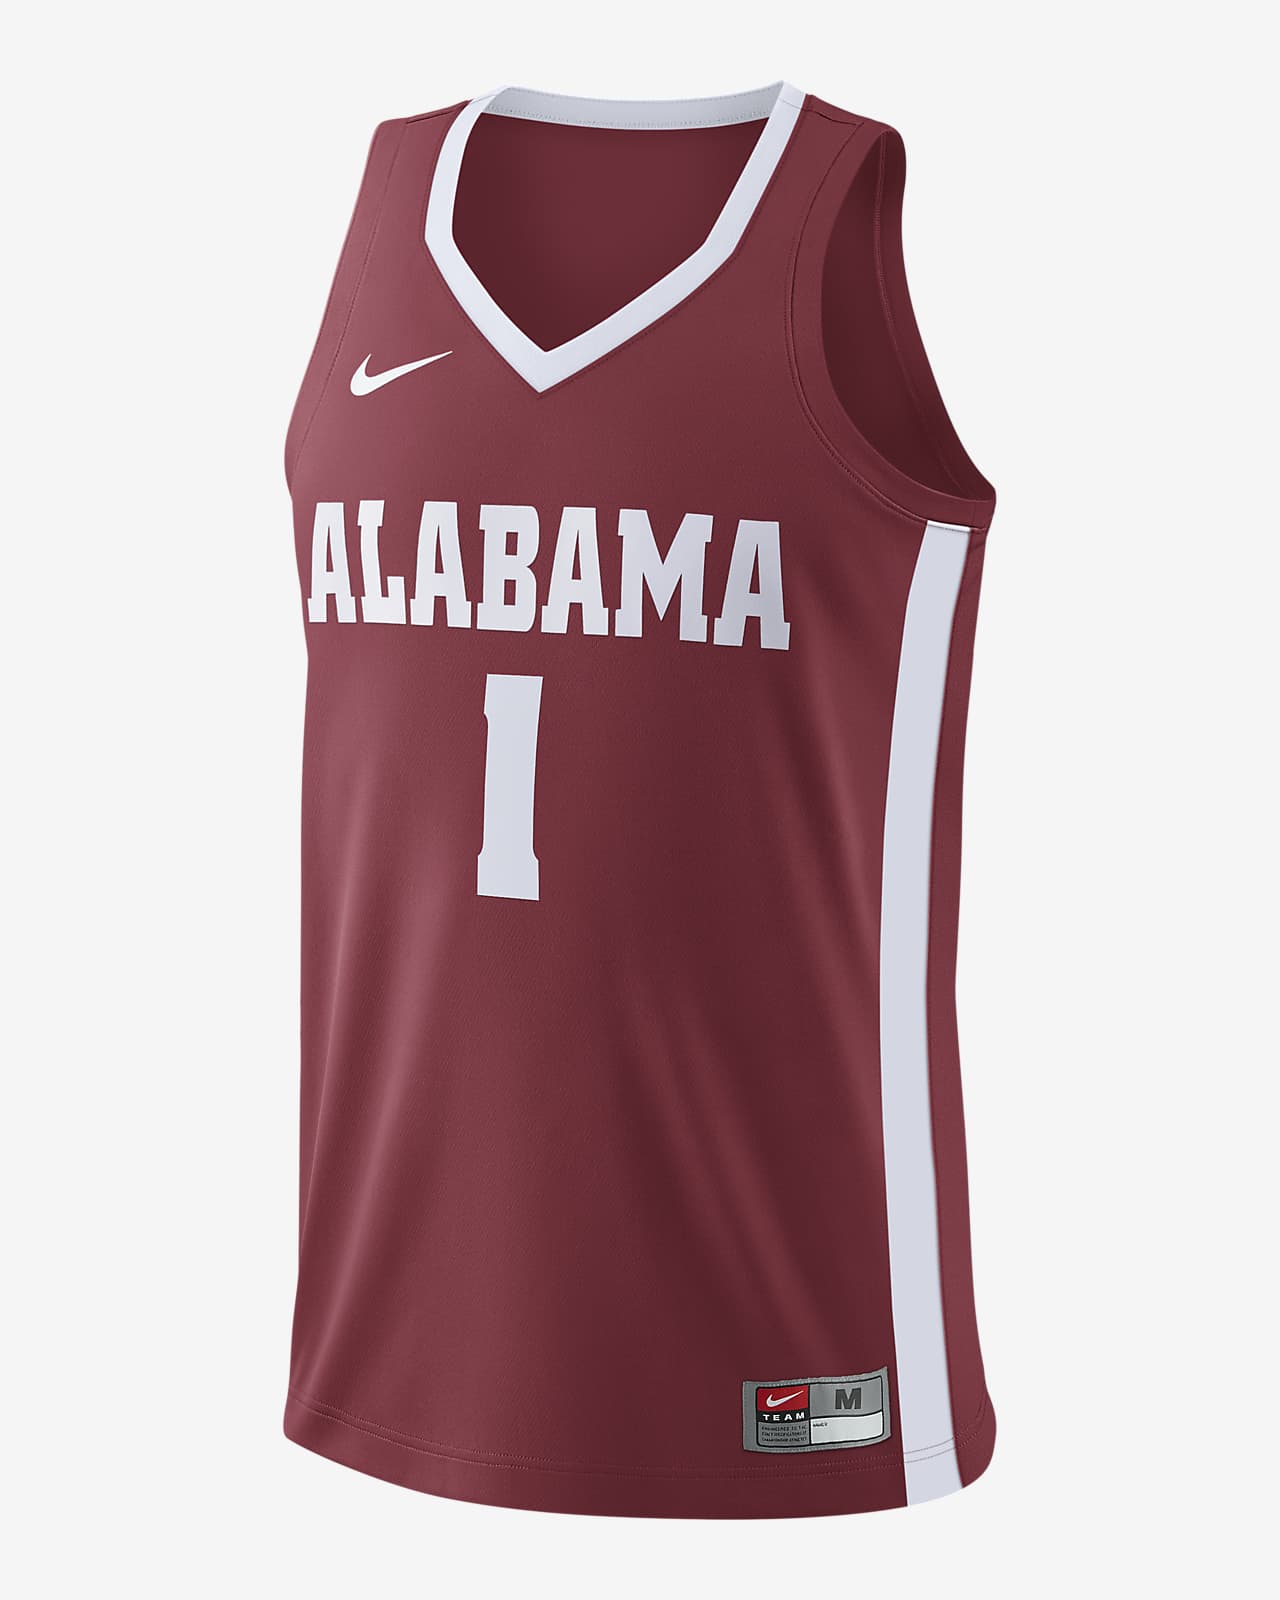 Jersey de básquetbol para Nike College Dri-FIT (Alabama).